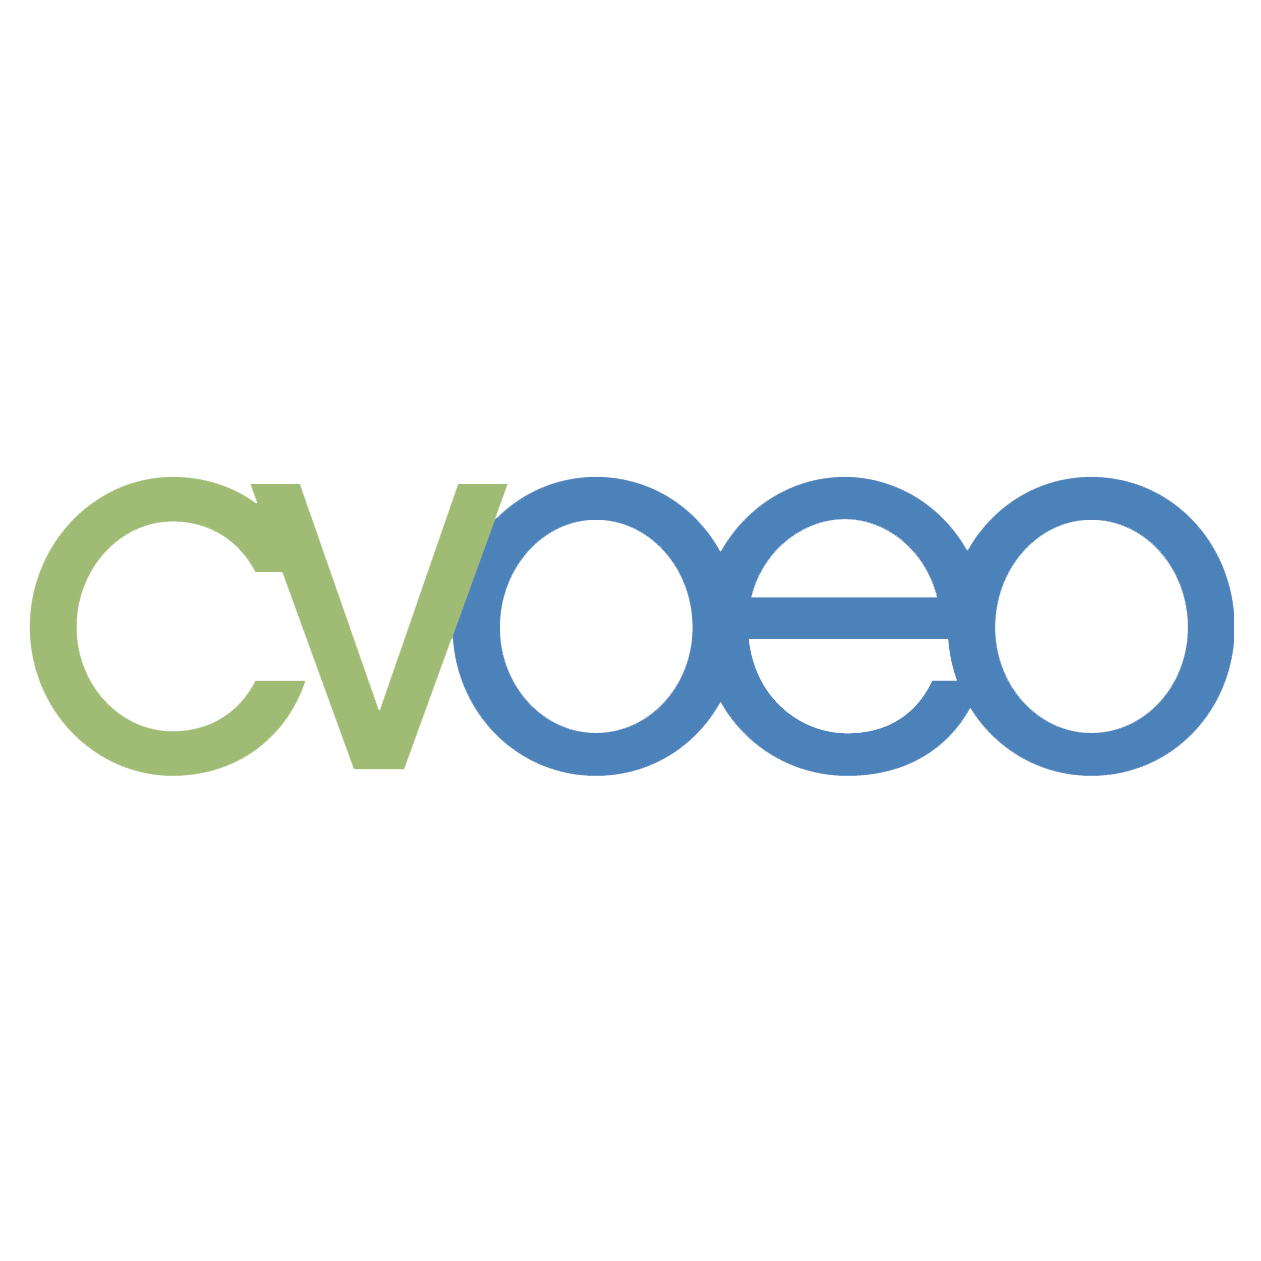 CVOEO - Chittenden Community Action